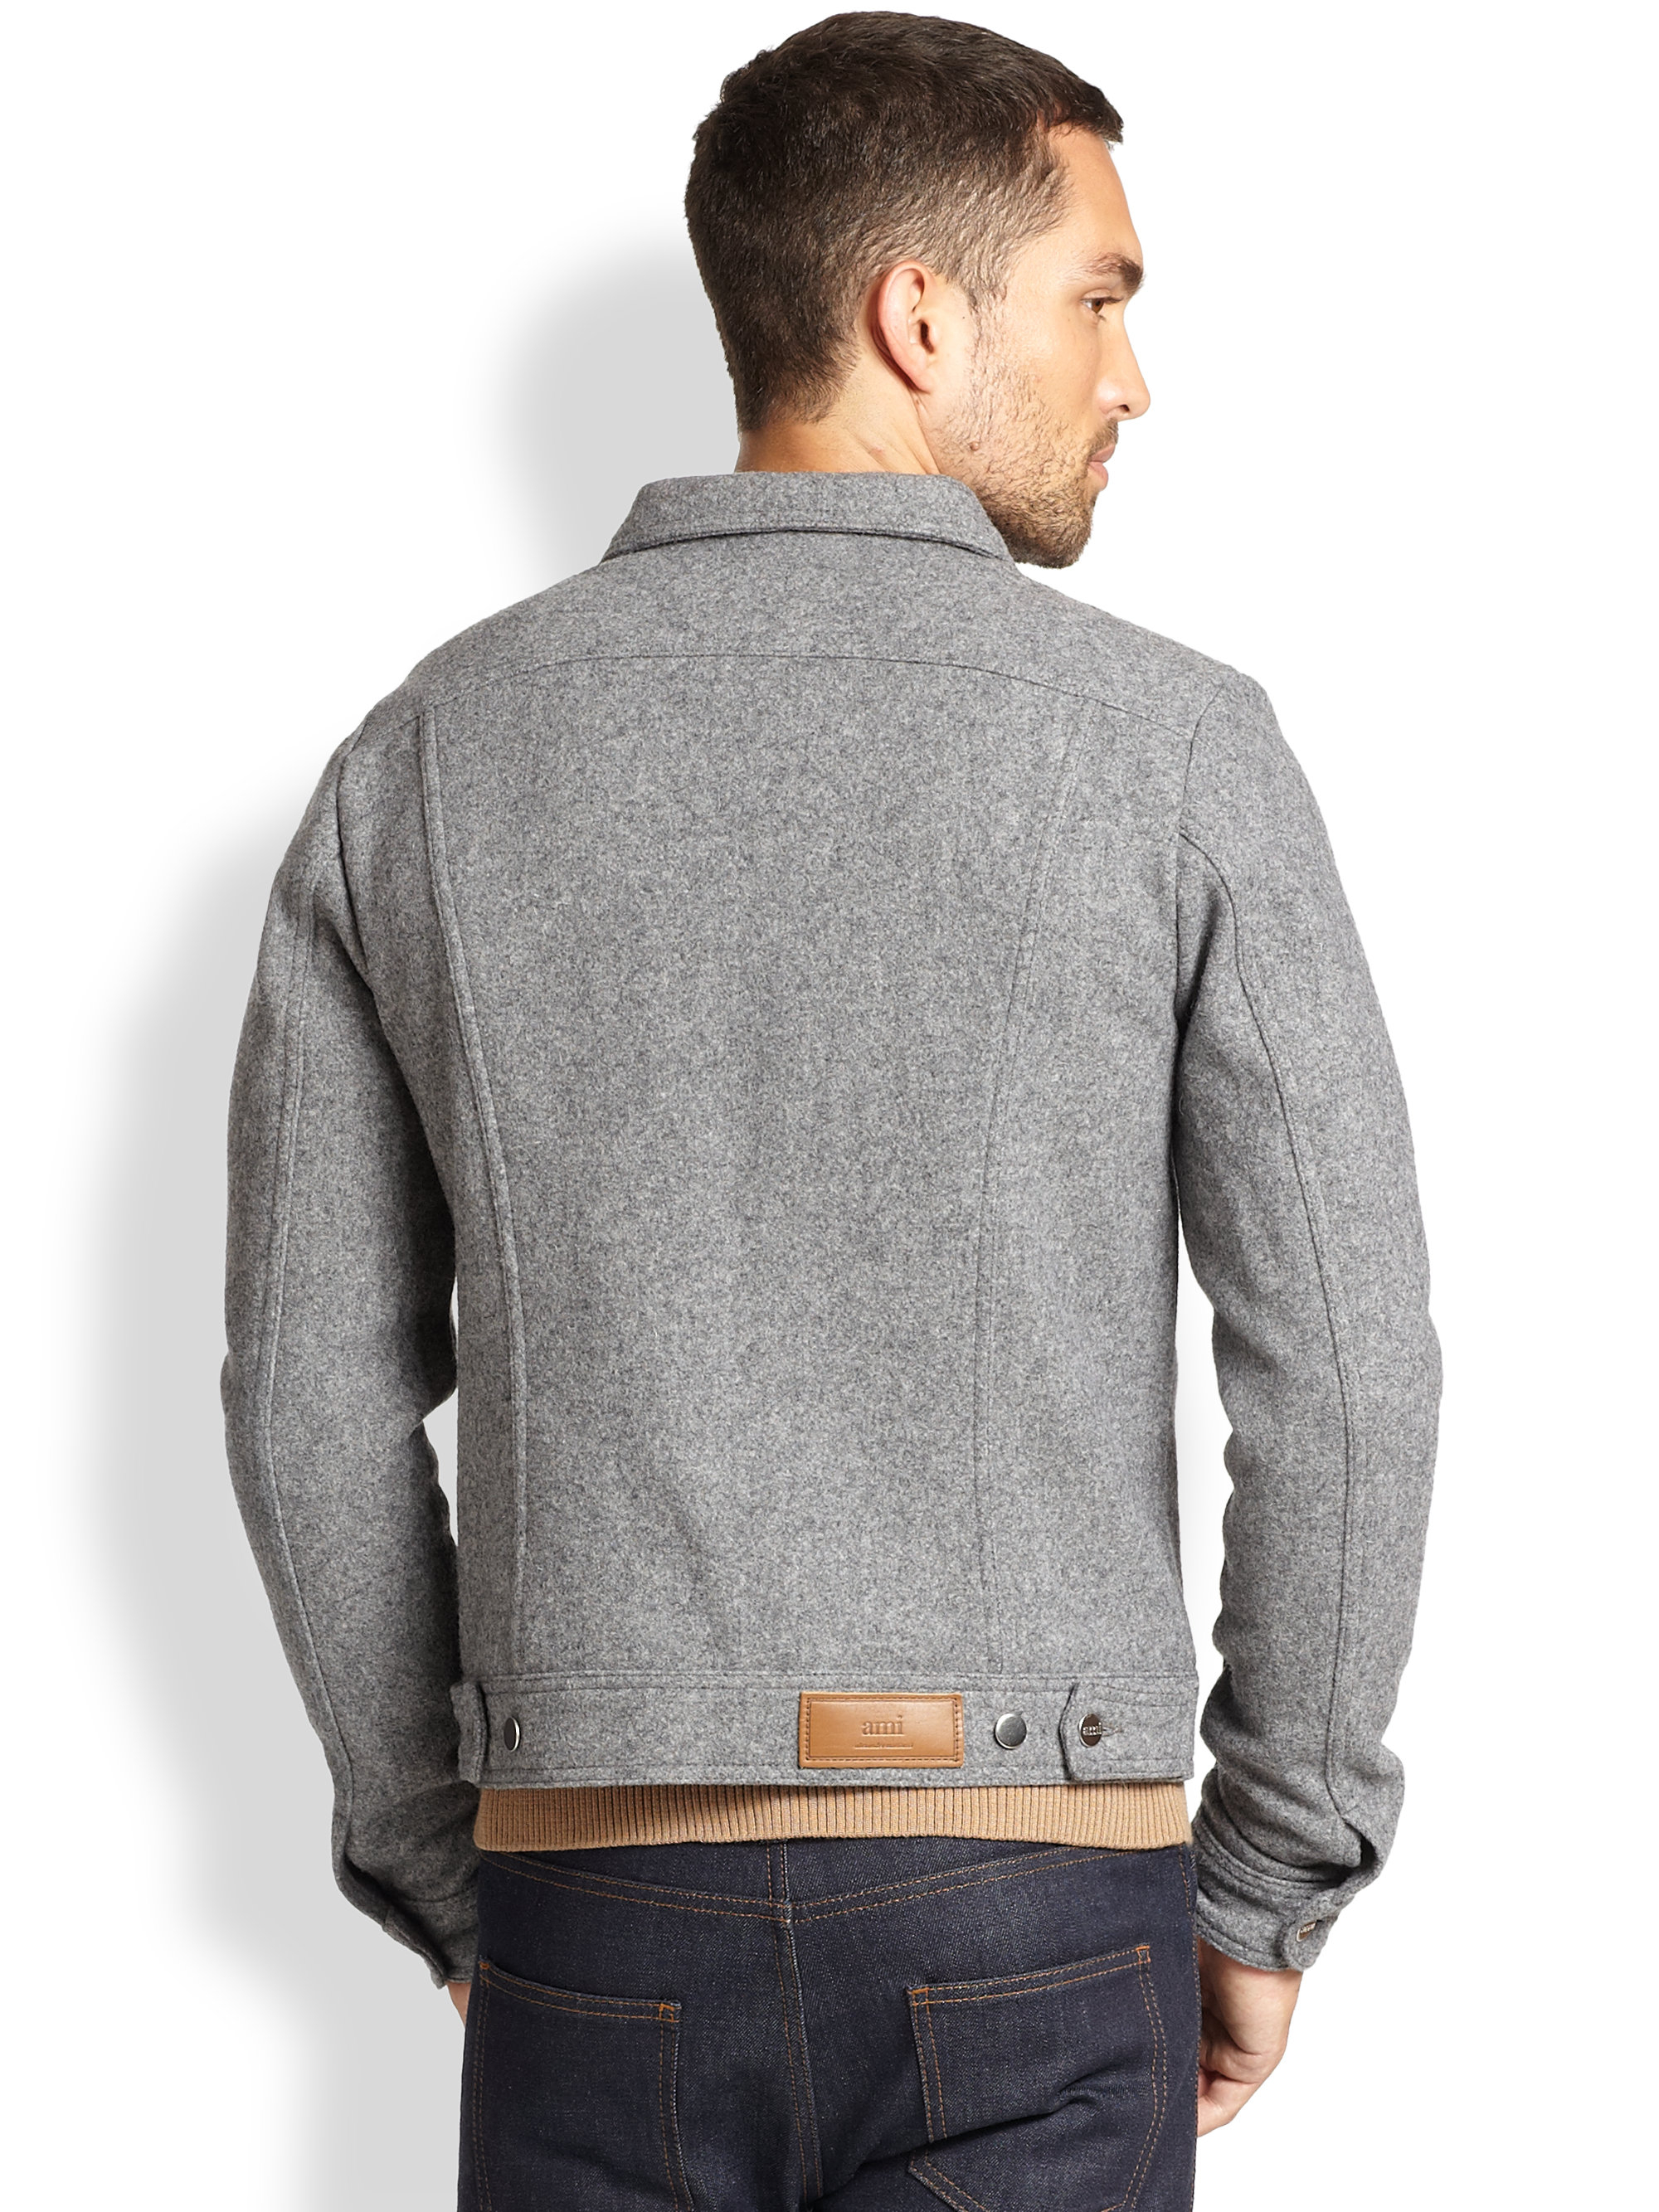 AMI Wool Jacket in Gray for Men - Lyst